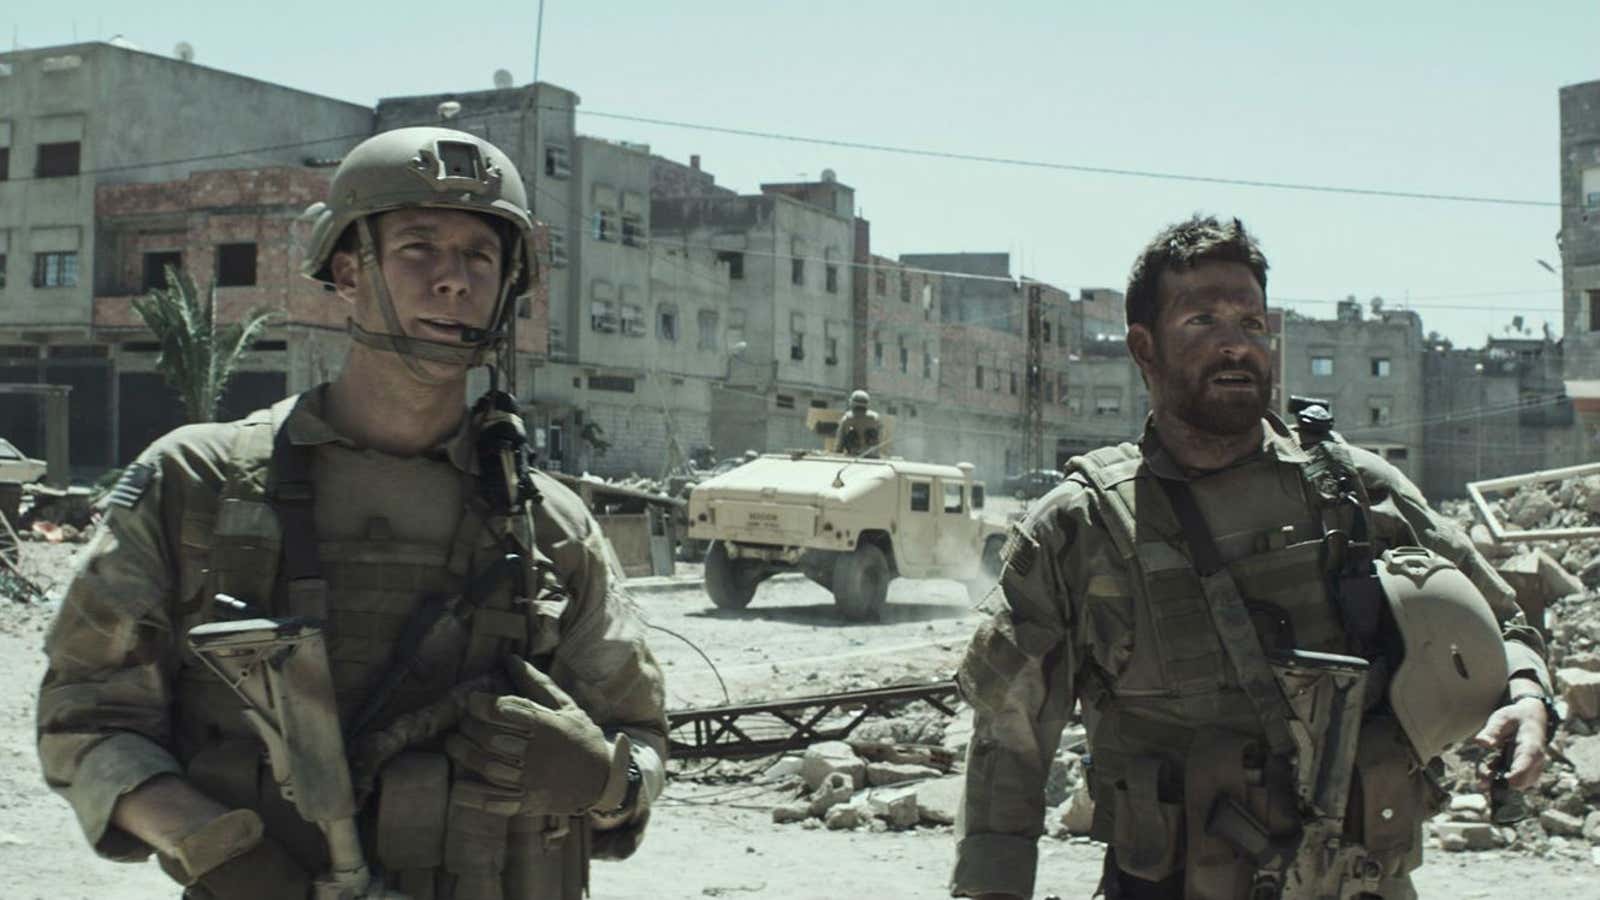 Bradley Cooper (right) in “American Sniper.”